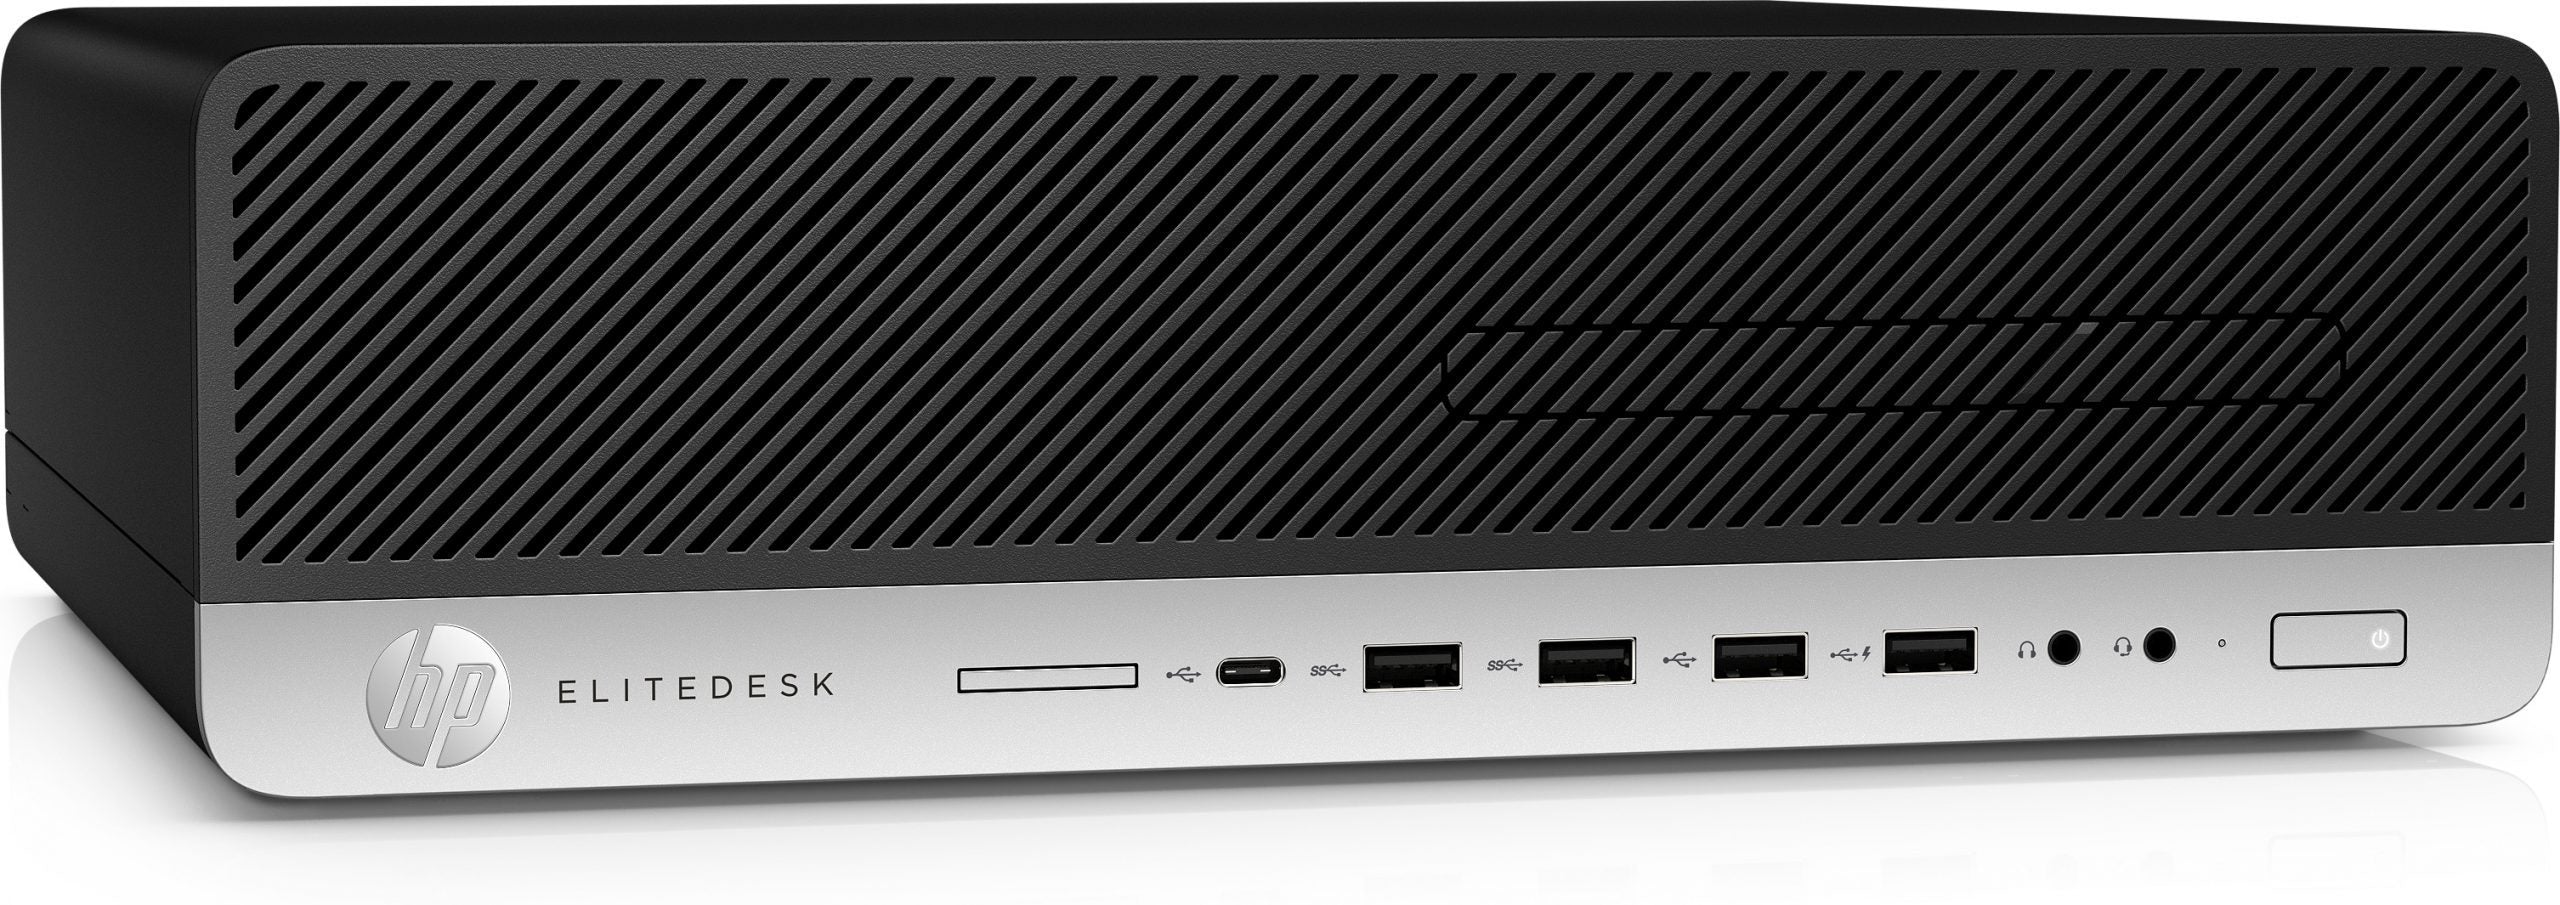 HP EliteDesk 800 G3 SFF | i5-7500 3,4 GHz | 8/16 GB RAM | SSD 480 GB + 1 TB SATA | USB-C Windows 10 Pro